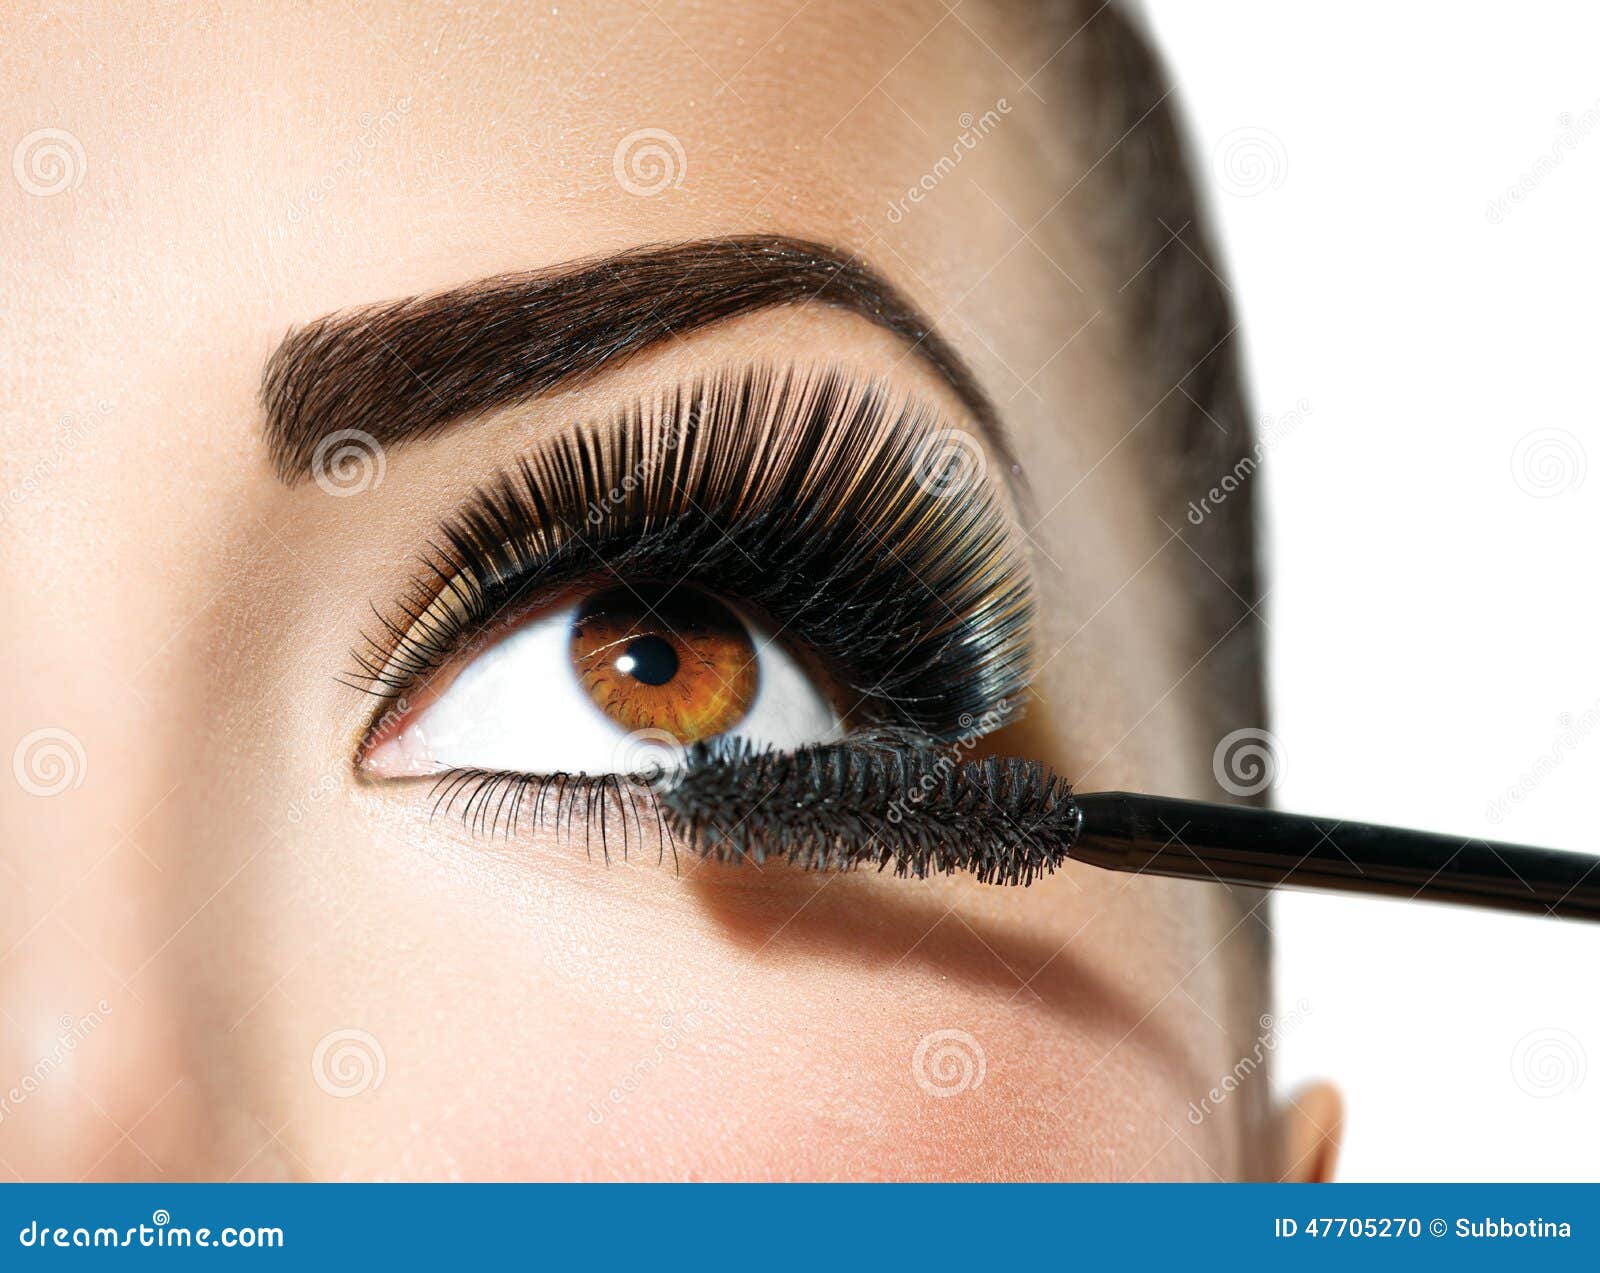 mascara applying. long lashes closeup